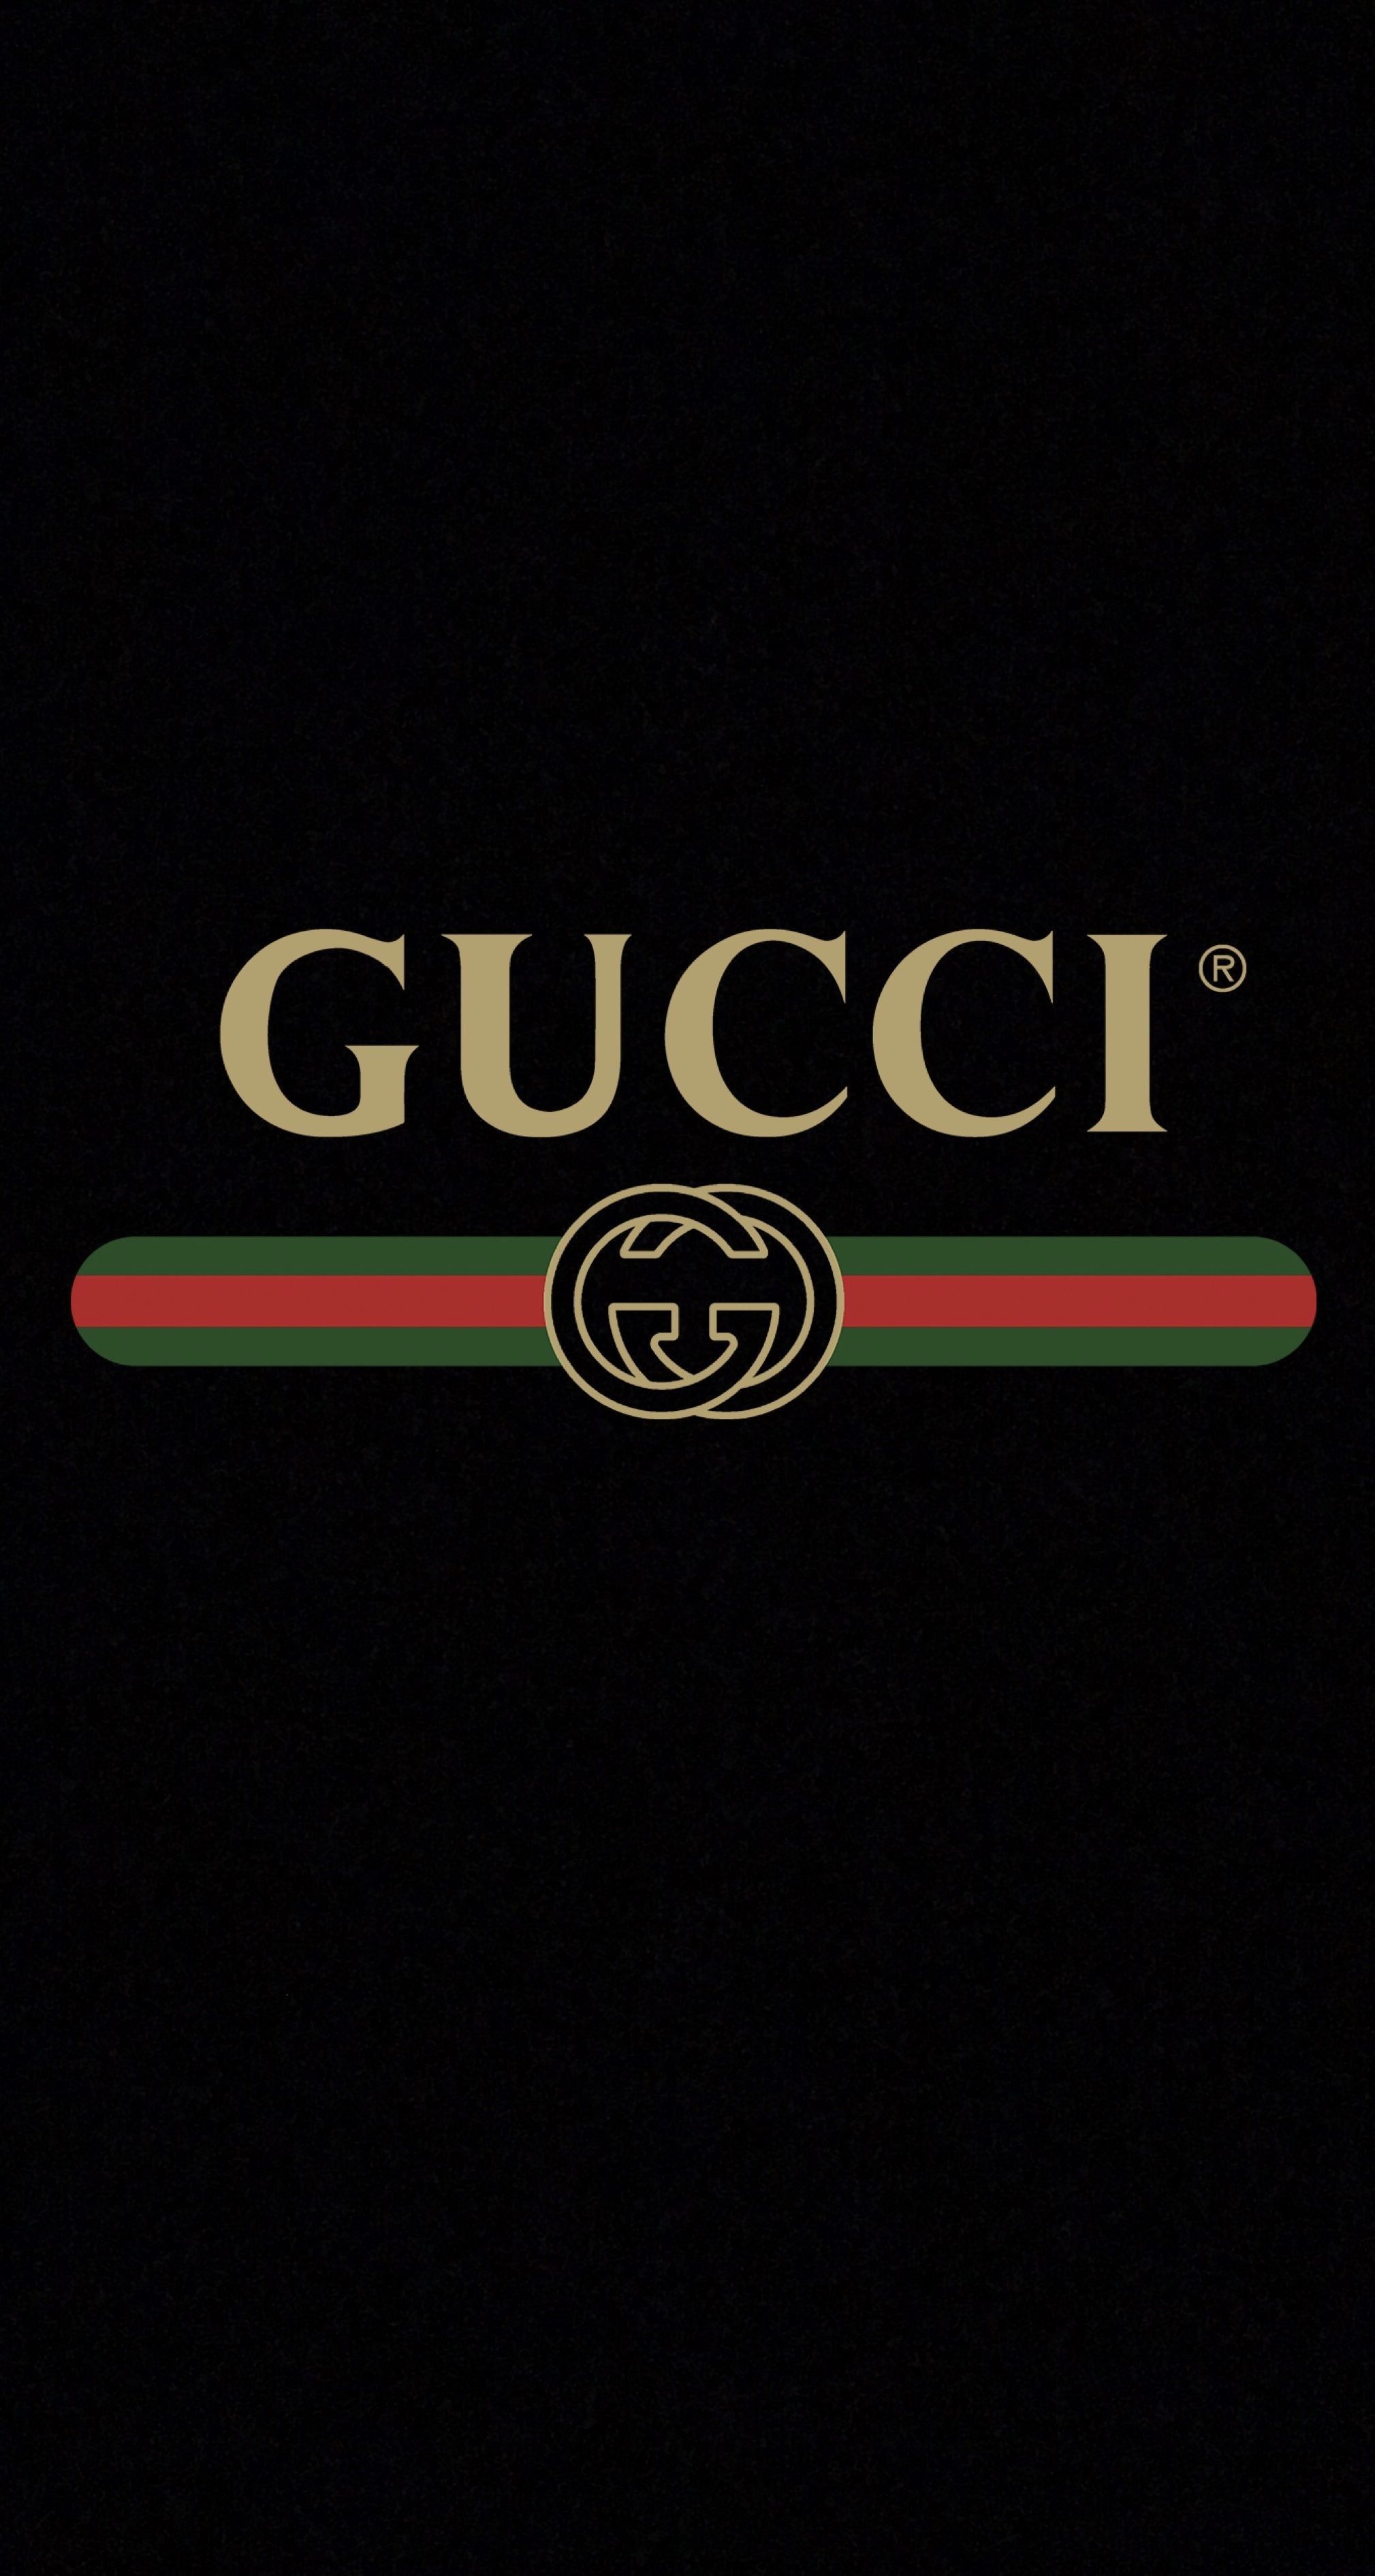 28+] Gucci Backgrounds - WallpaperSafari